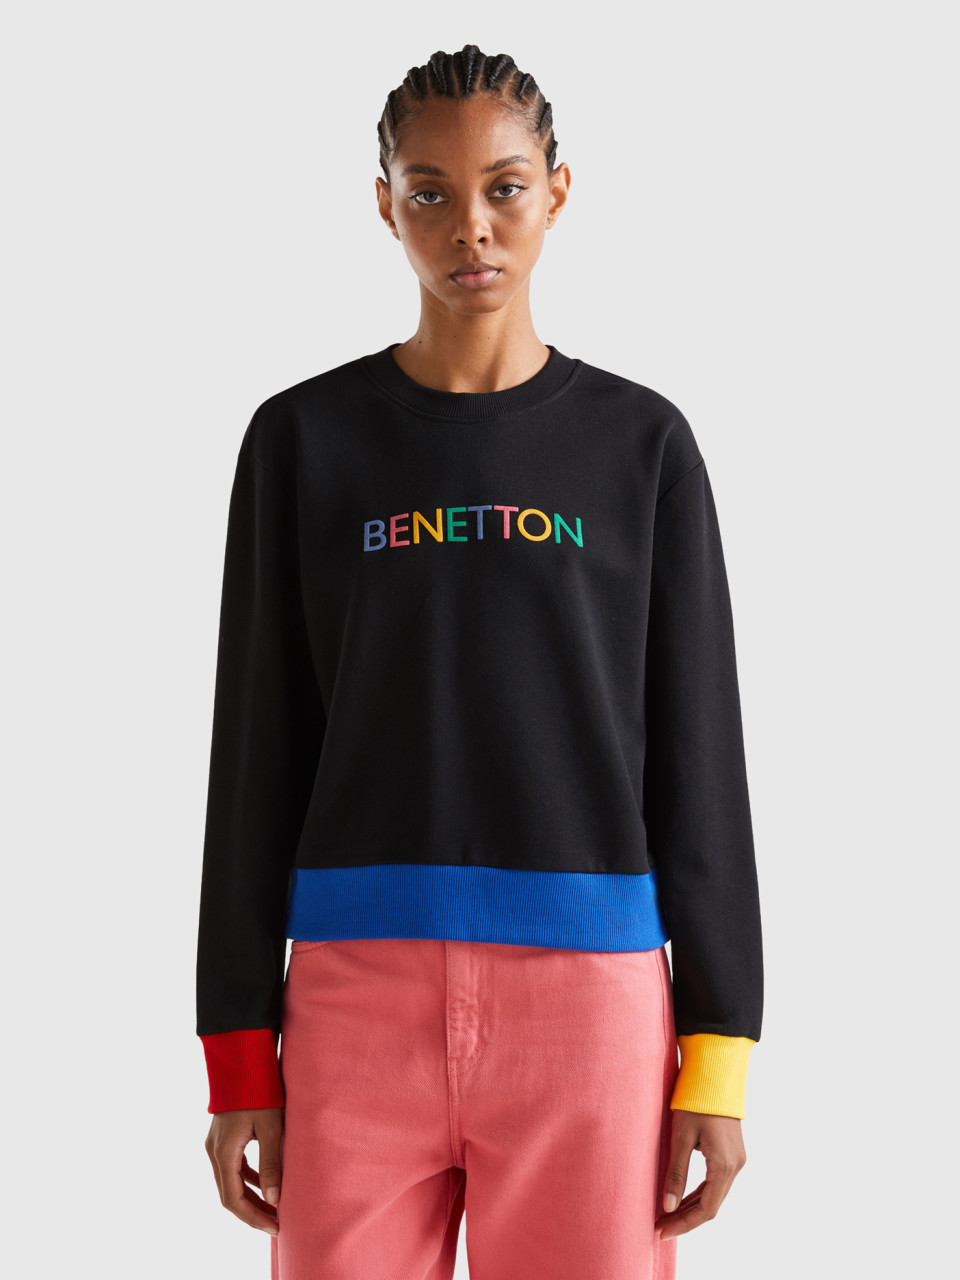 Benetton, Pullover Sweatshirt With Logo Print, Black, Women